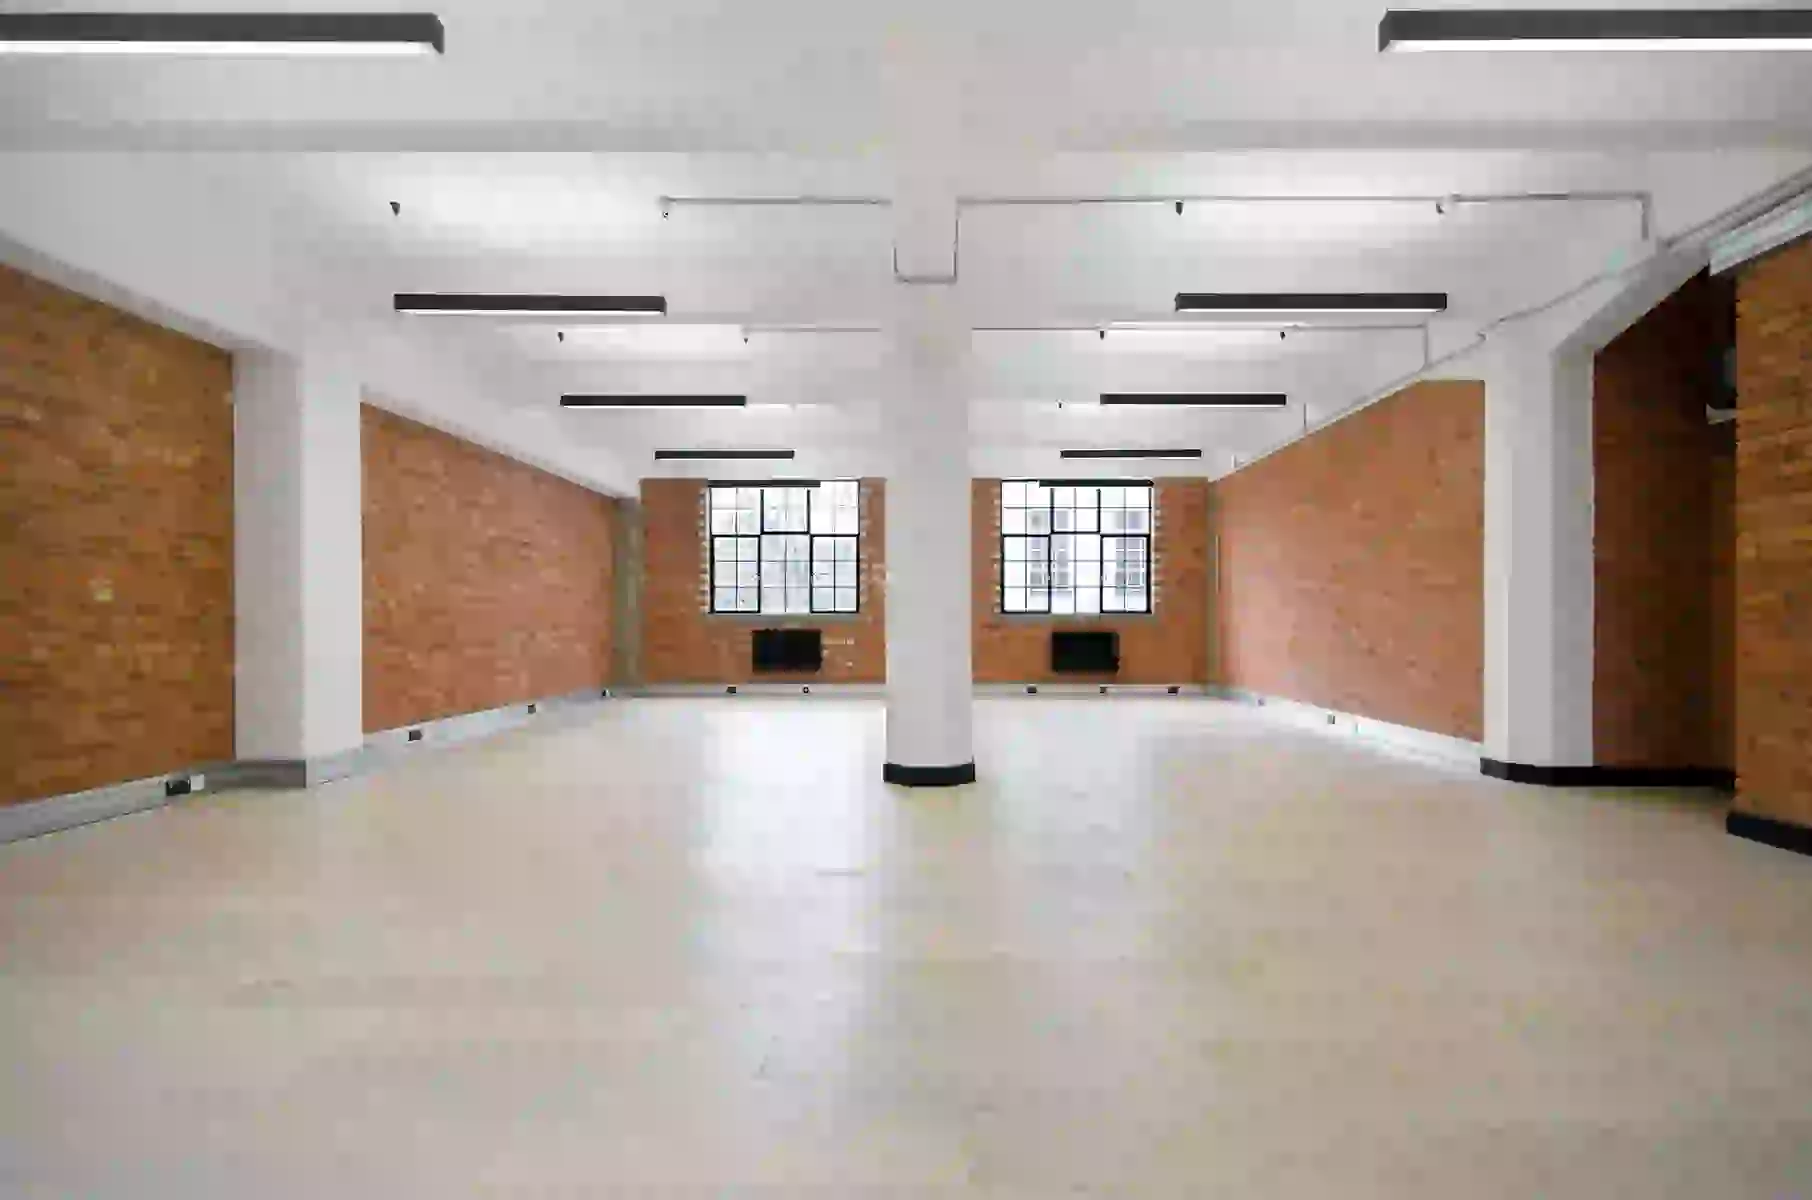 Office space to rent at Pall Mall Deposit, 124-128 Barlby Road, Ladbroke Grove, London, unit PL29, 1125 sq ft (104 sq m).